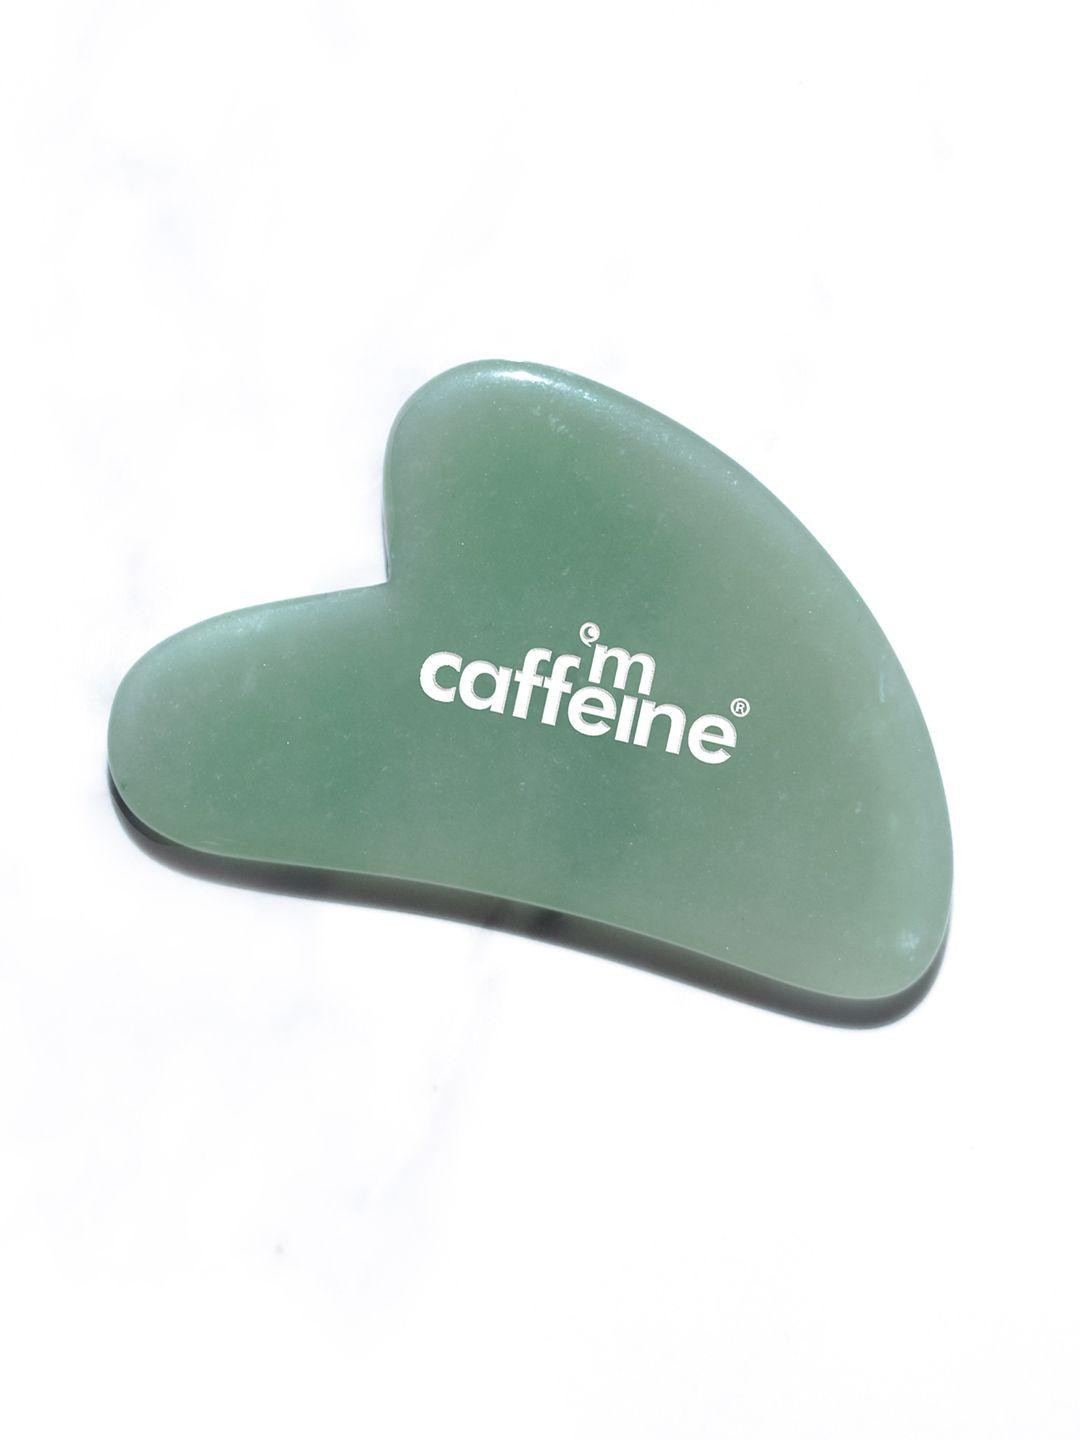 mcaffeine sustainable gua sha - green quartz